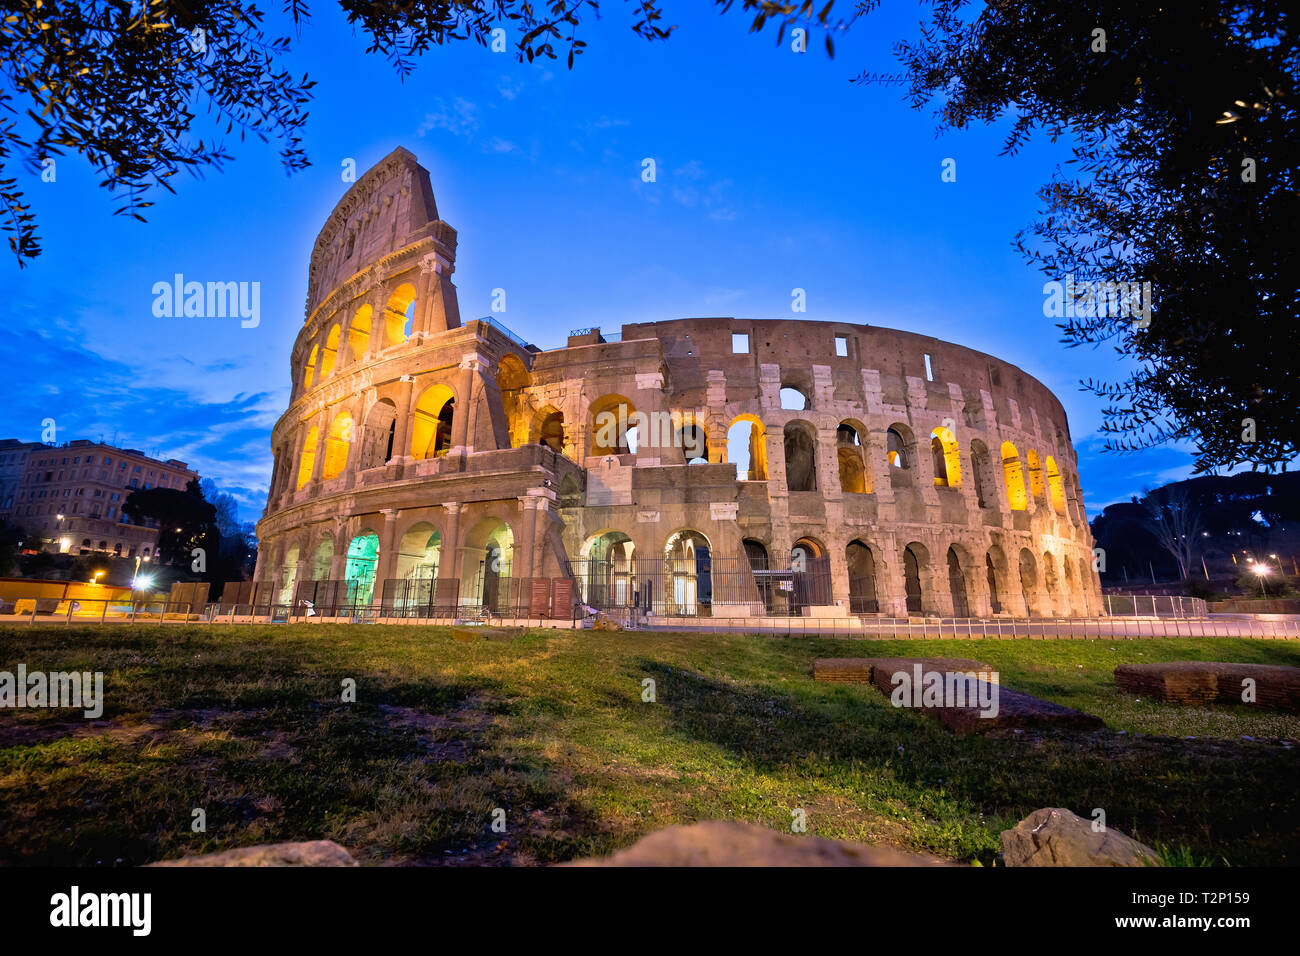 El coliseo de roma vista del amanecer, famoso símbolo de la ciudad eterna, capital de Italia Foto de stock